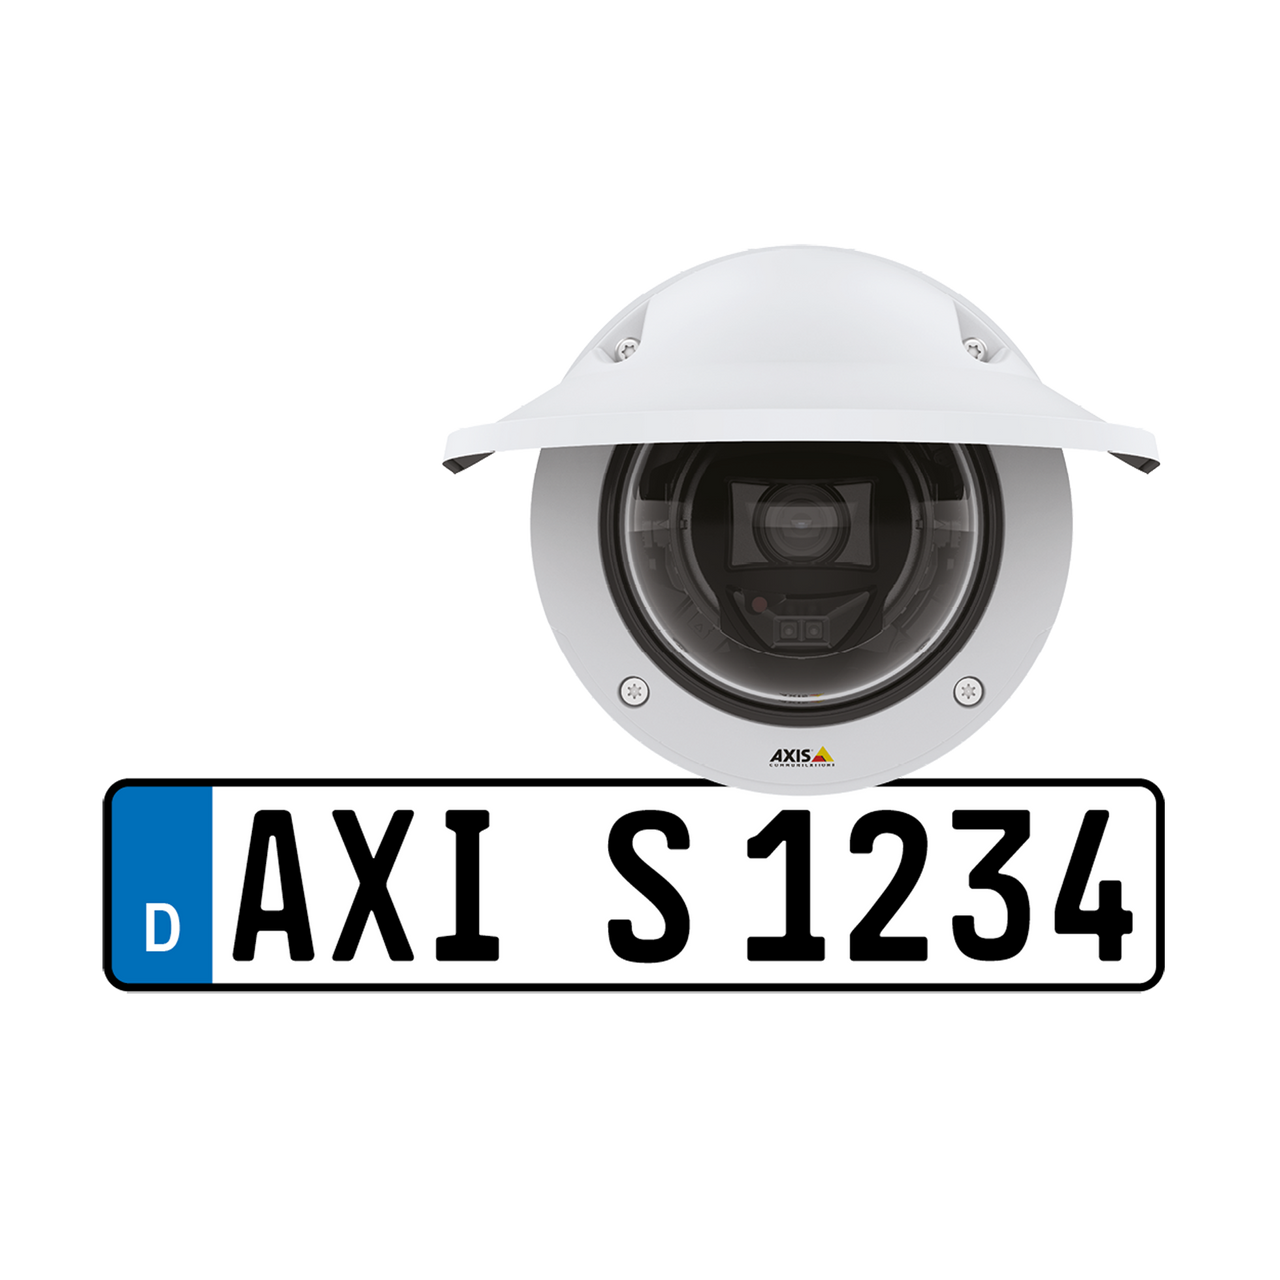 AXIS P3245-LVE-3 L. P. Verifier Kit Easy, cost-effective vehicle access control